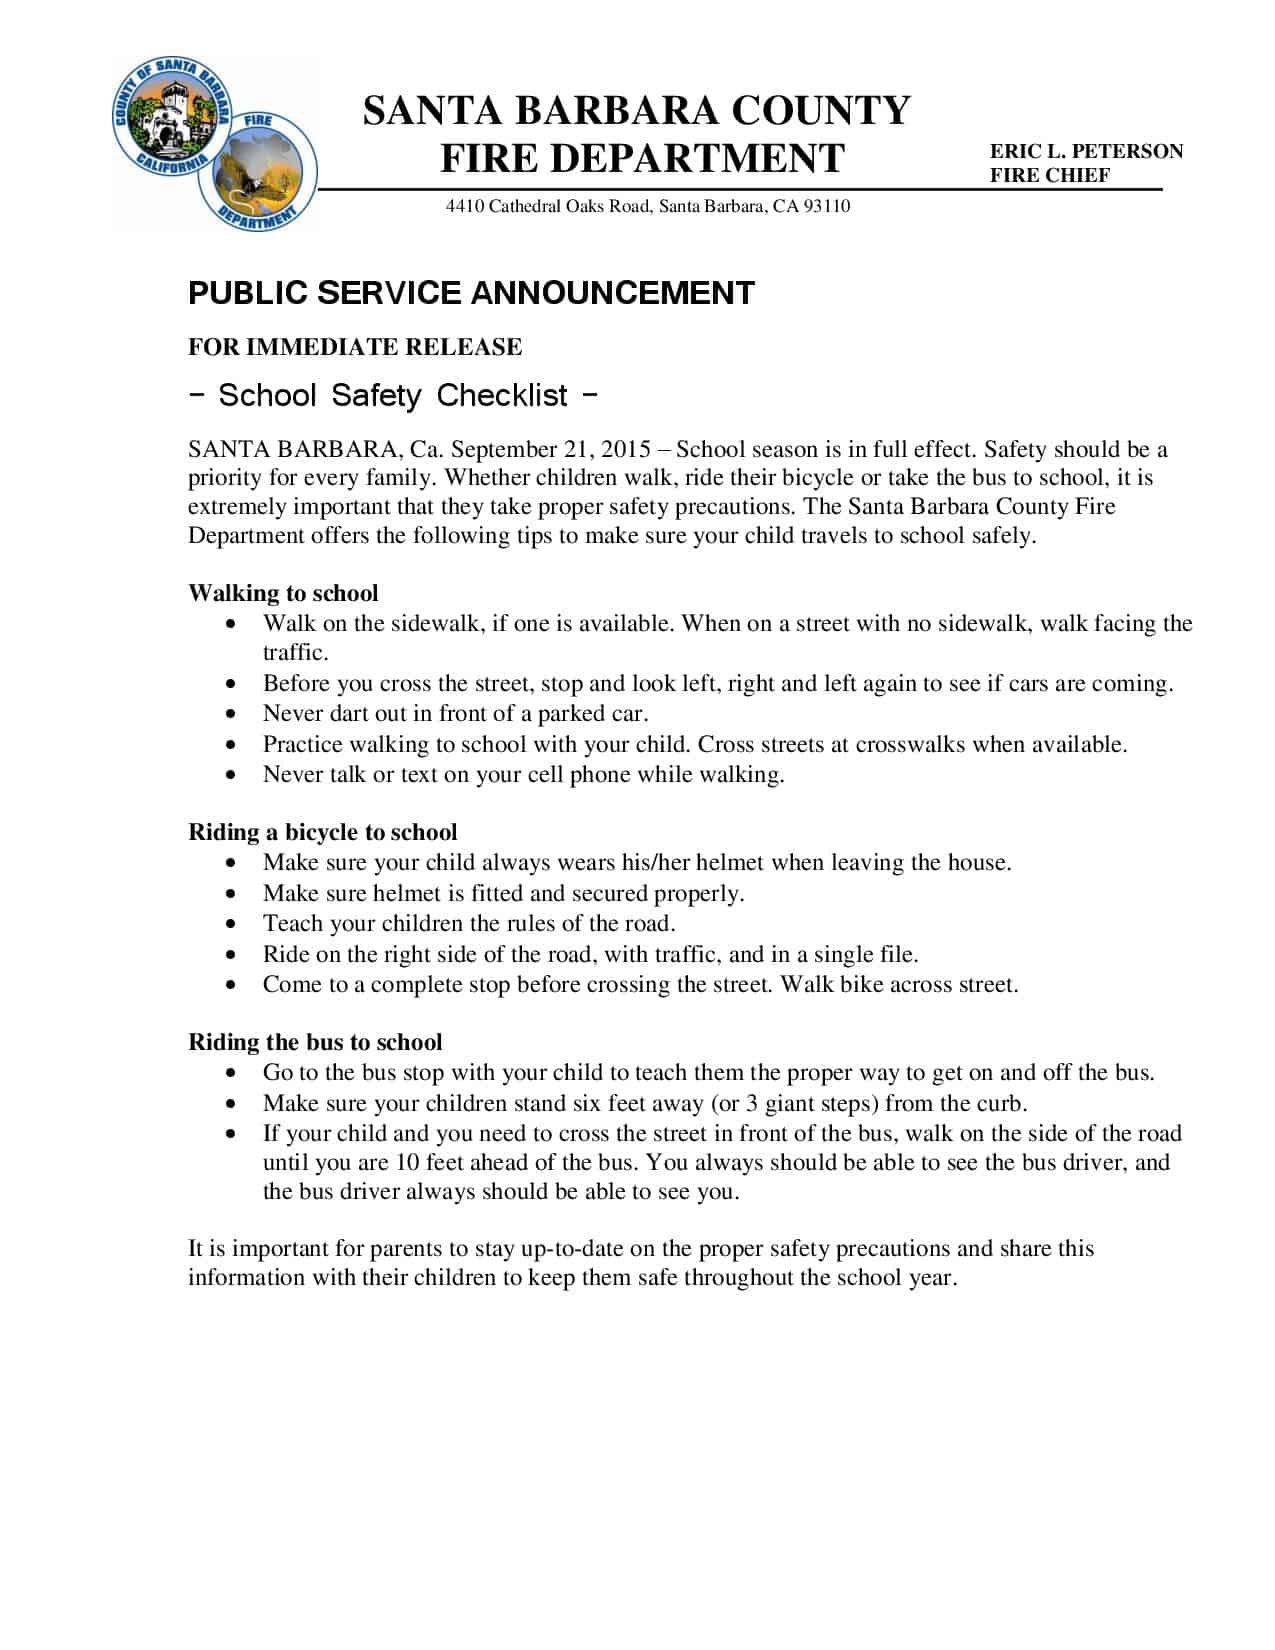 School Safety PSA